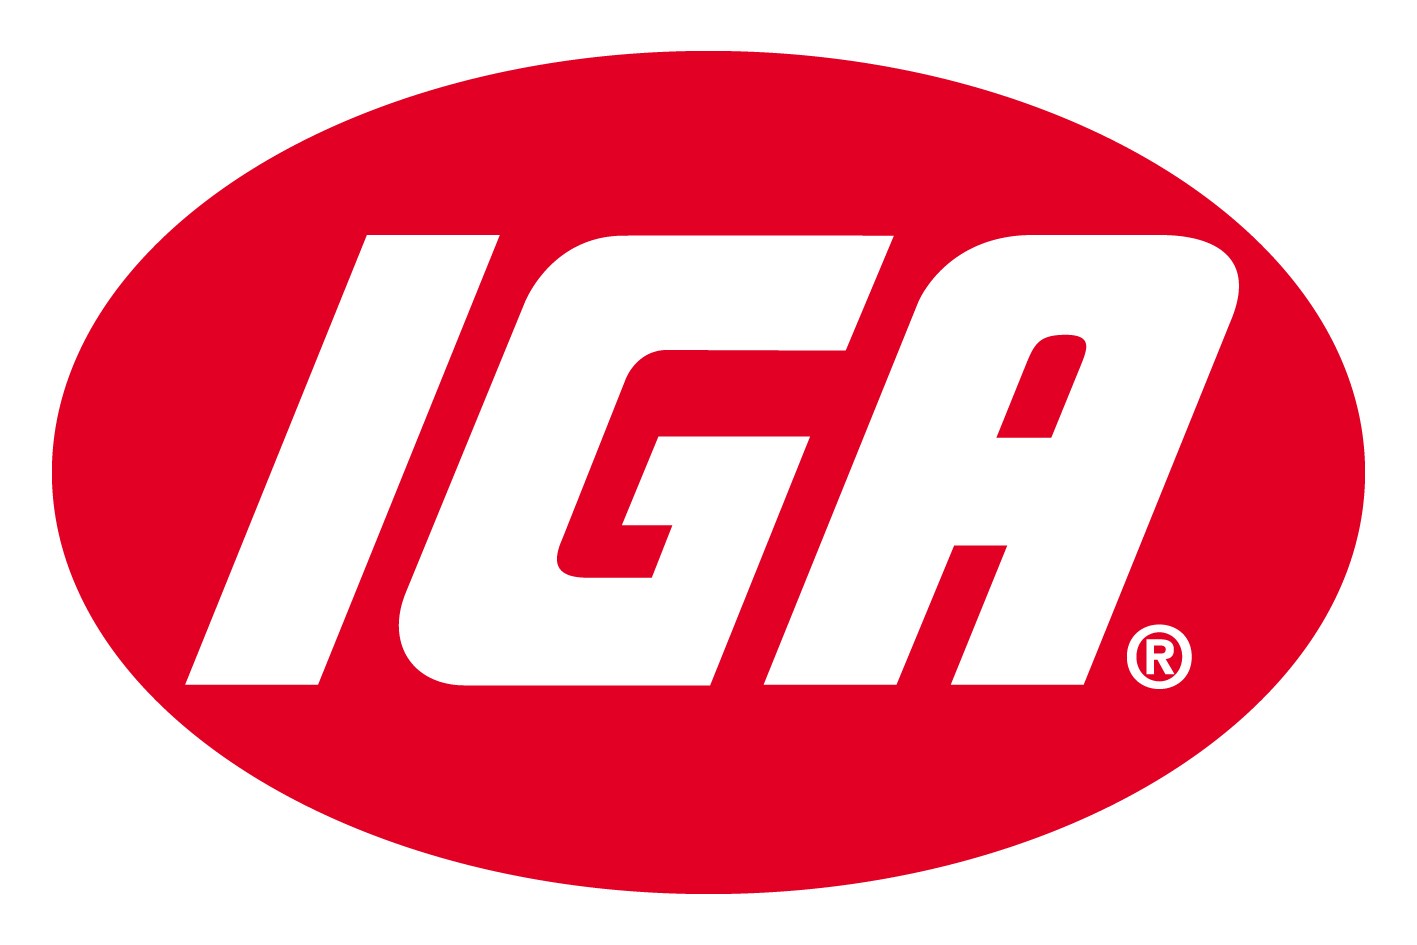 IGA logo.JPG